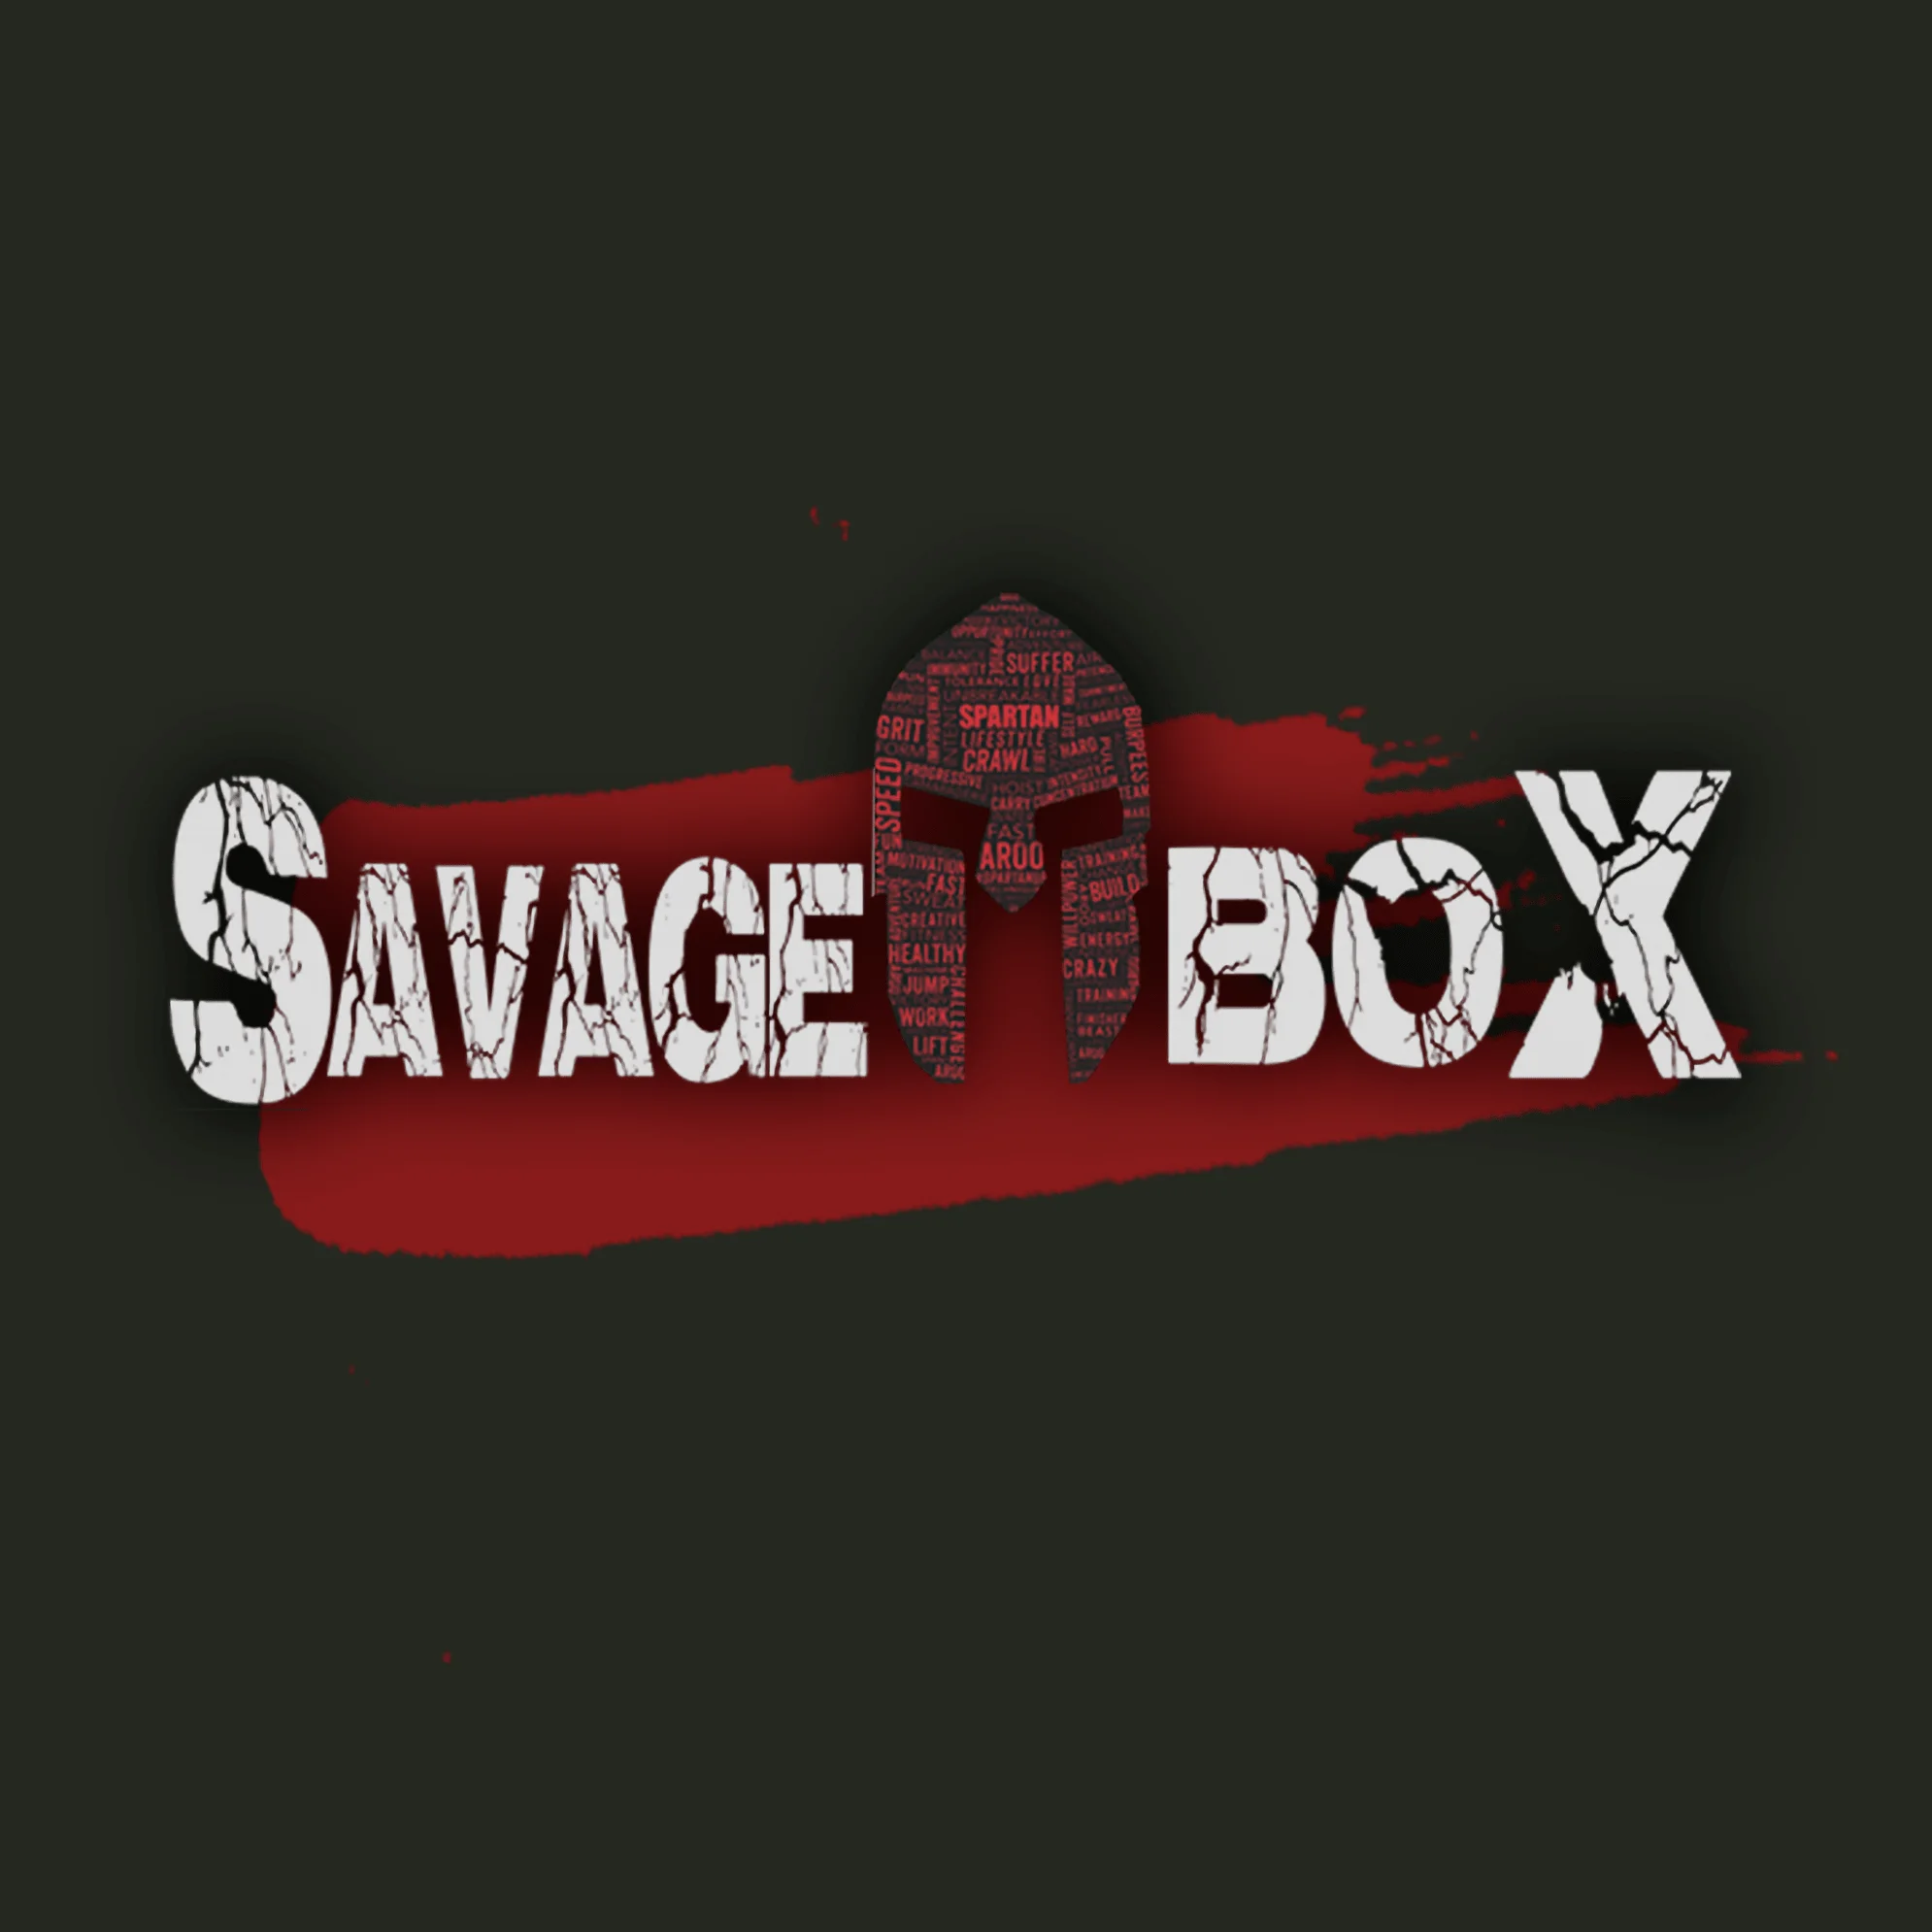 Crossfit-savage-box-11769